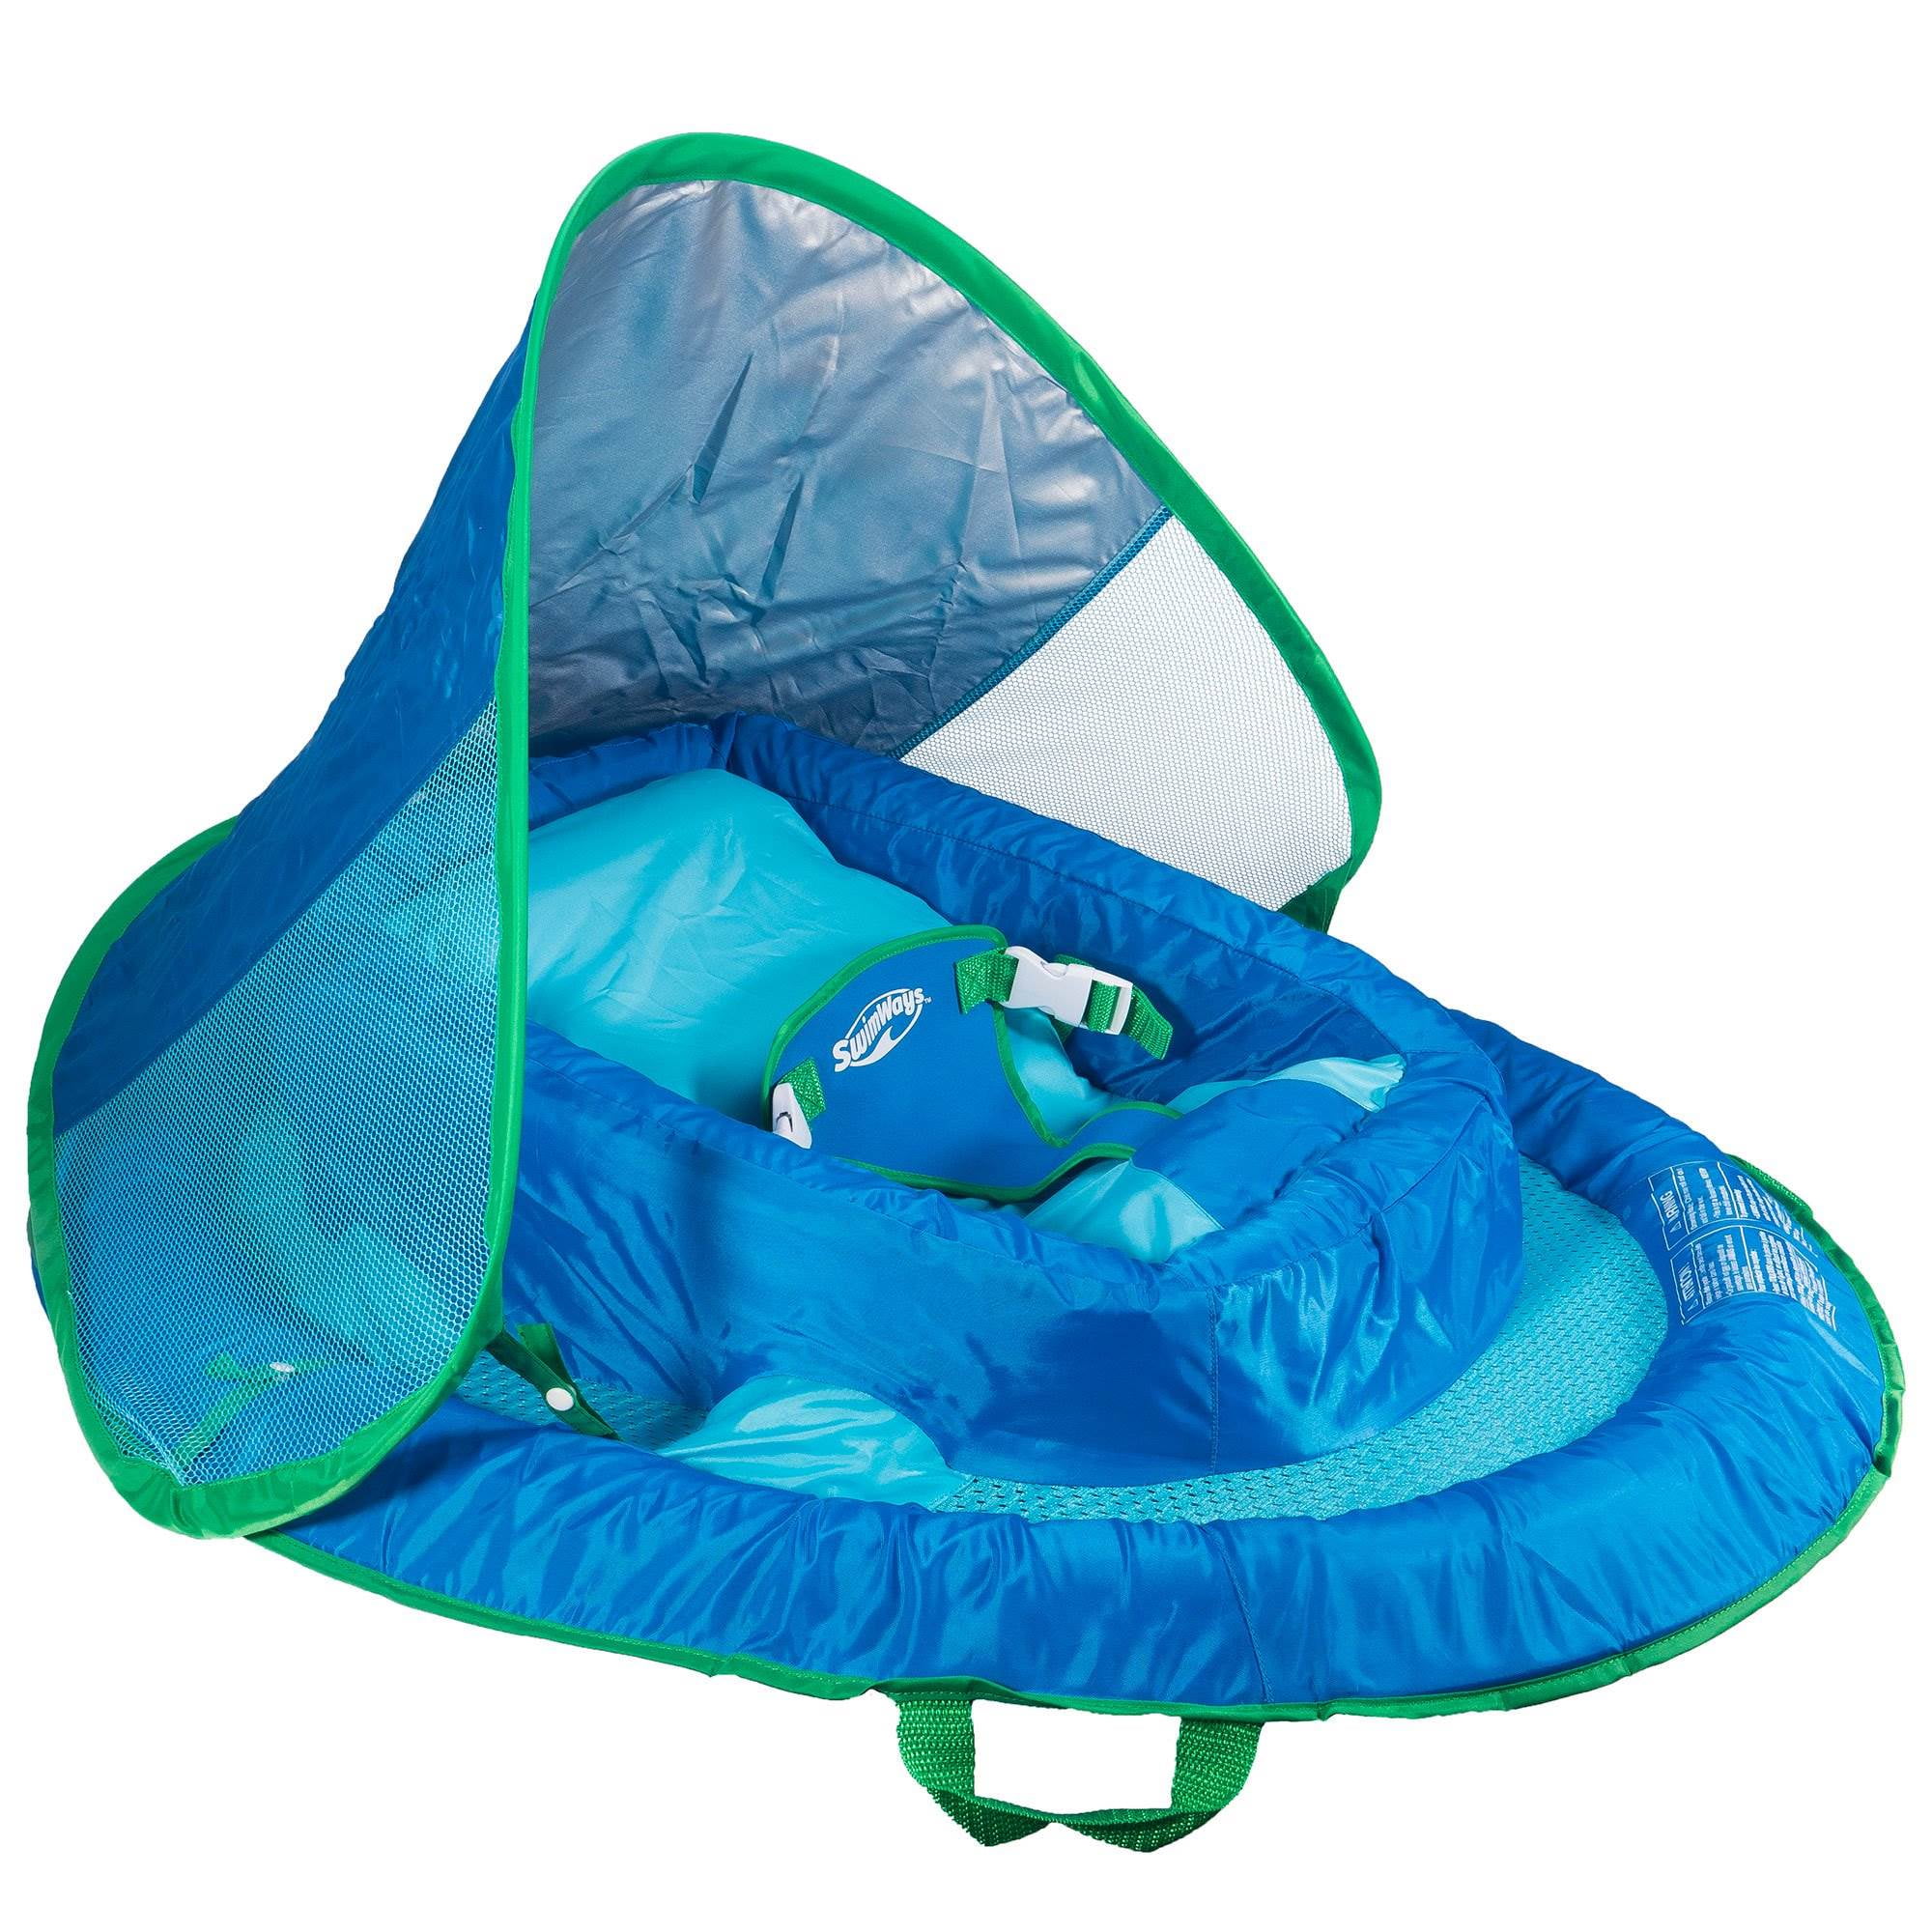 SwimWays Infant Spring Float Sun Canopy Swim Step 1 Age 3-9 Mon 90927agr Pink for sale online 